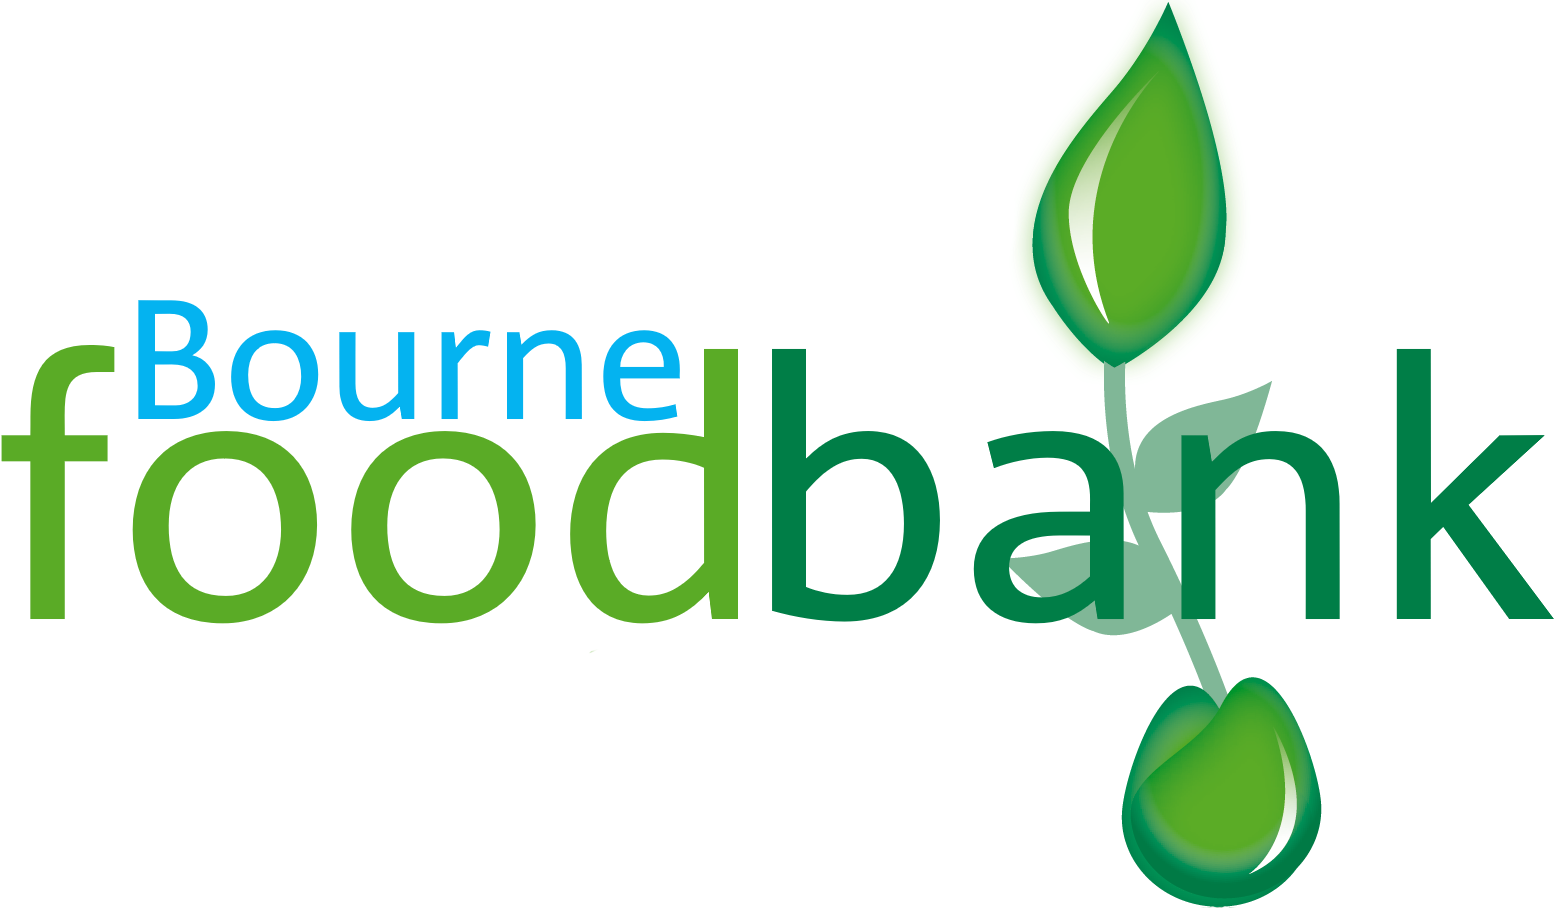 Bourne FoodBank